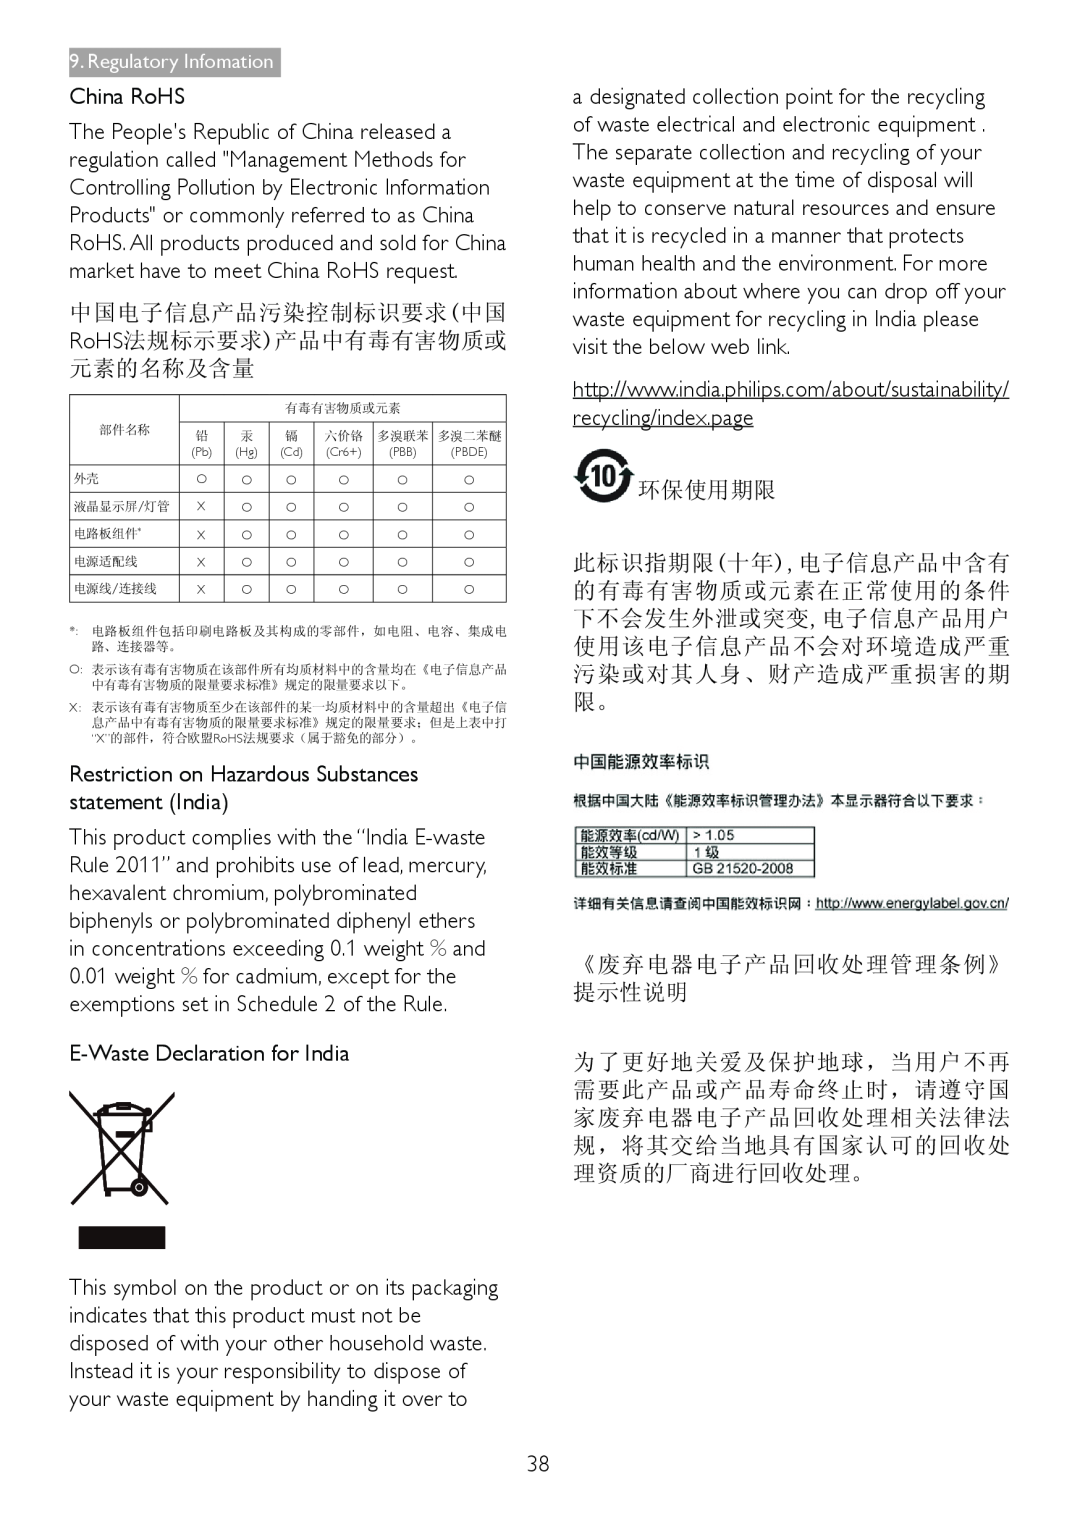 Philips 221P6, 221B6 China RoHS, 中国电子信息产品污染控制标识要求中国 RoHS法规标示要求产品中有毒有害物质或 元素的名称及含量, E-Waste Declaration for India, 环保使用期限 